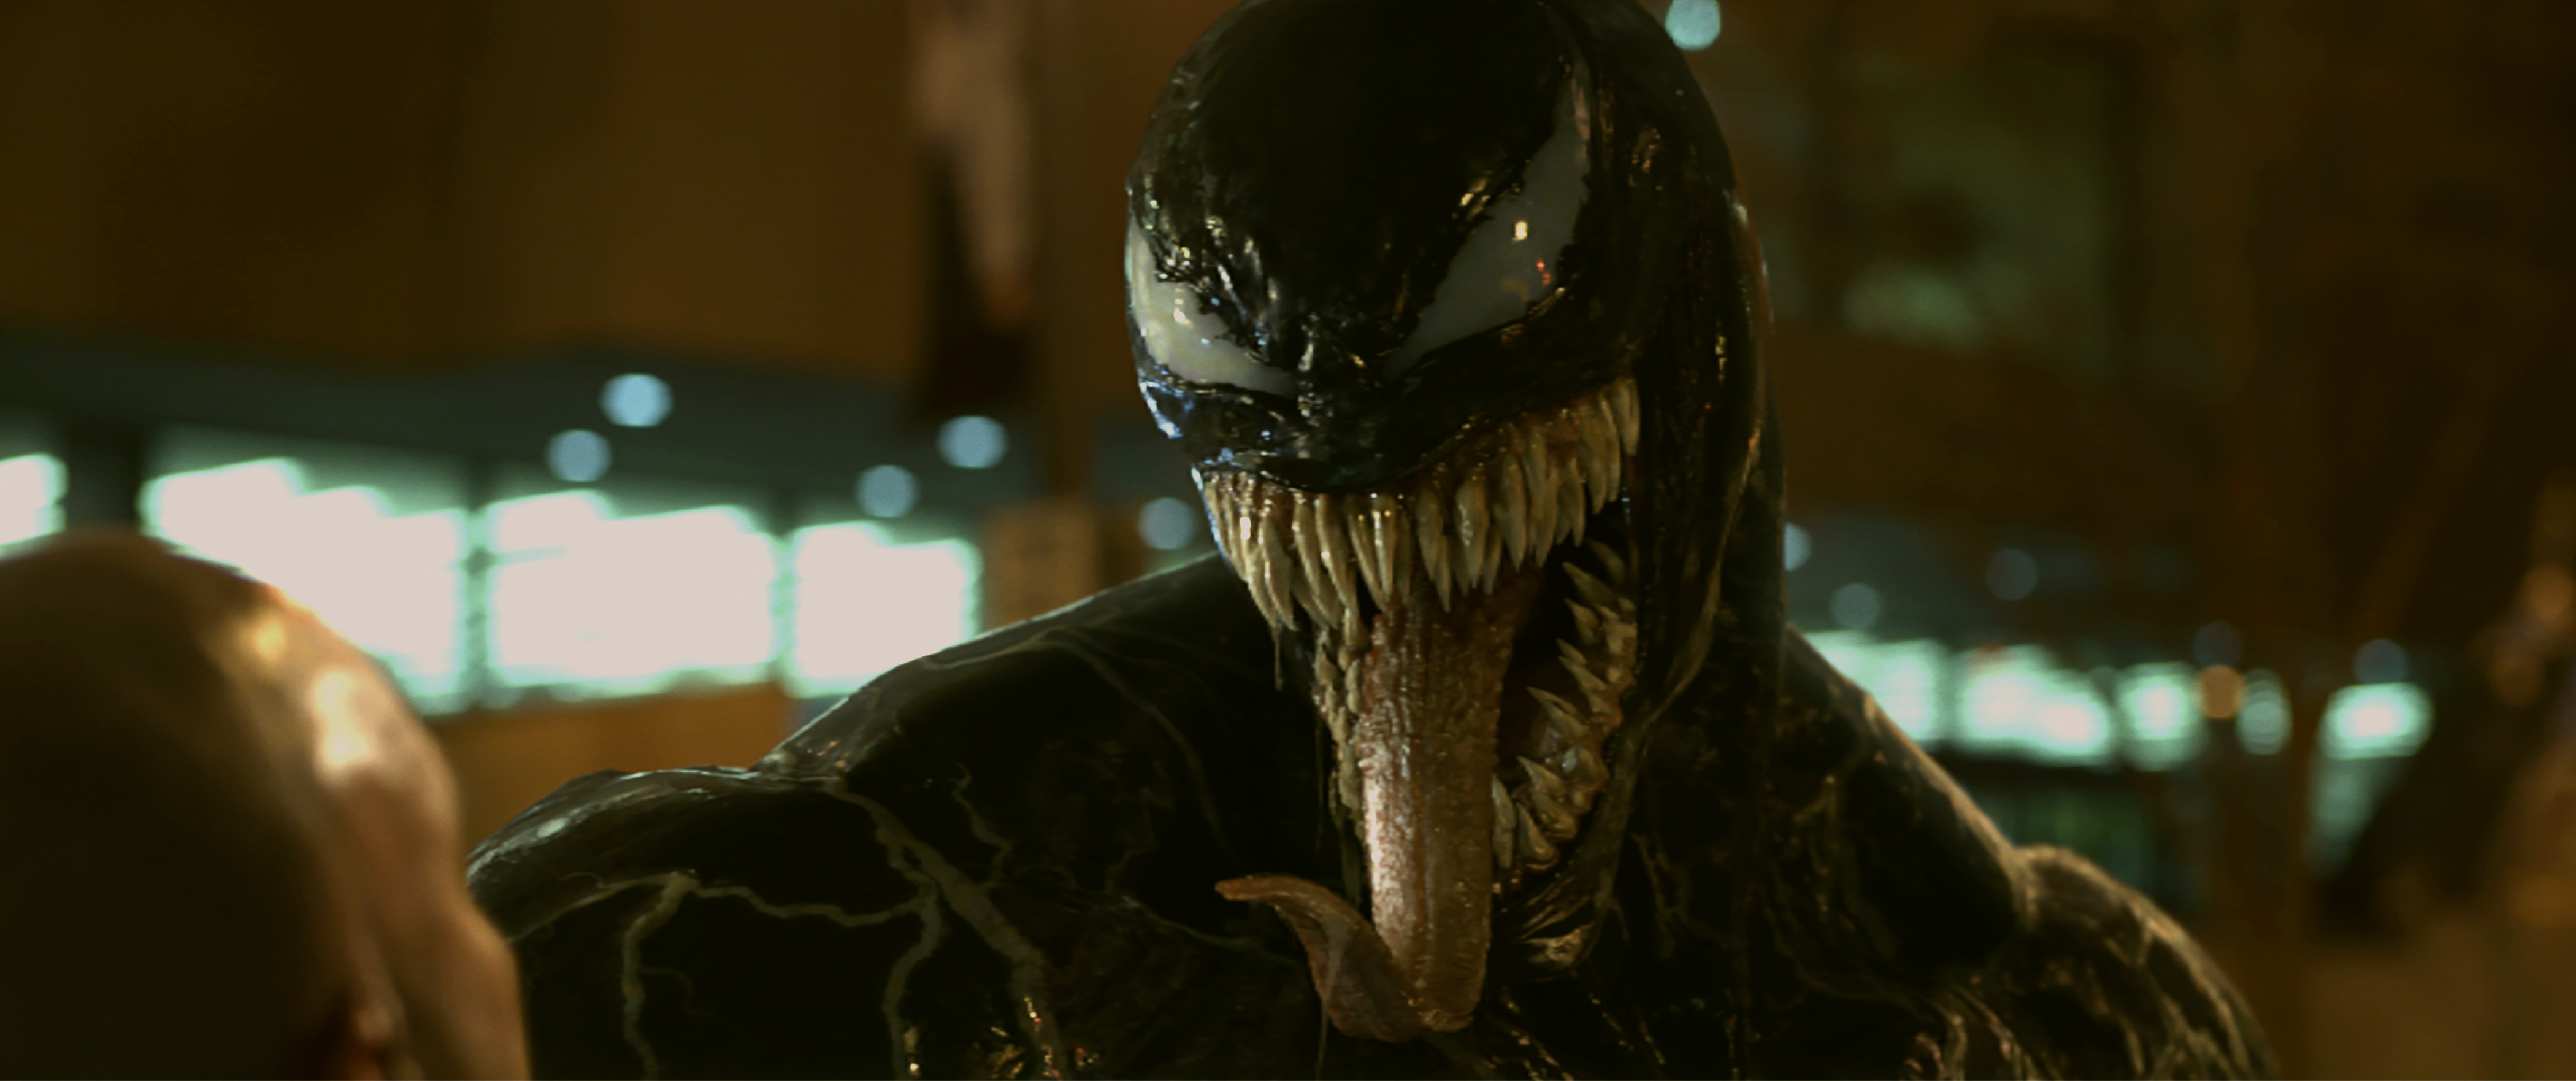 Venom jelenetfoto InterCom